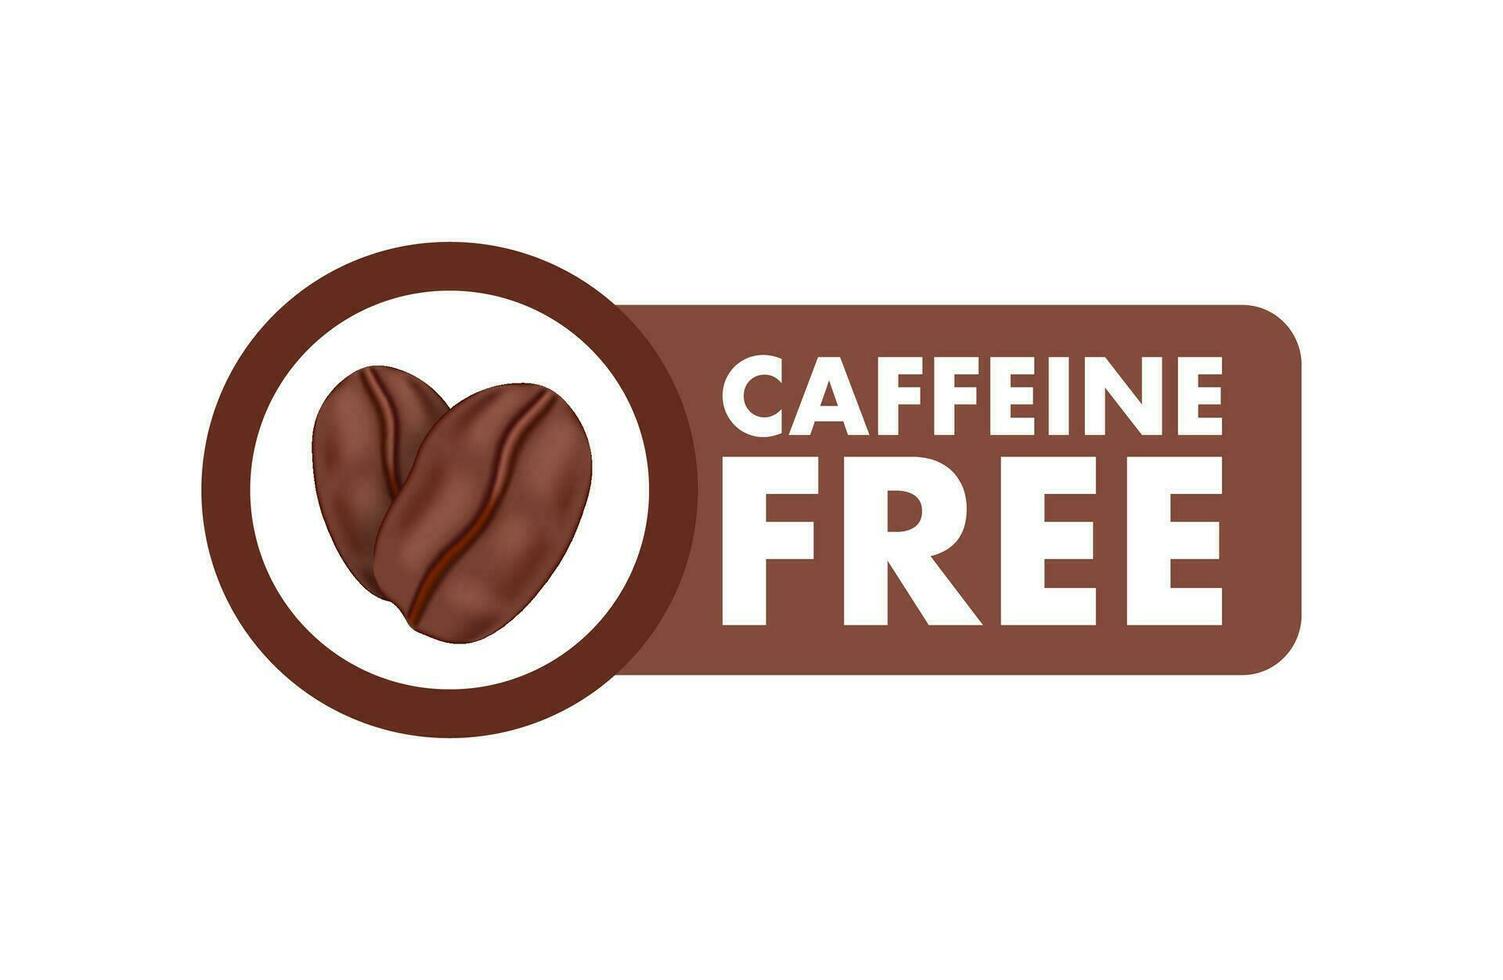 Caffeine free icon. Coffee beans. Vector stock illustration